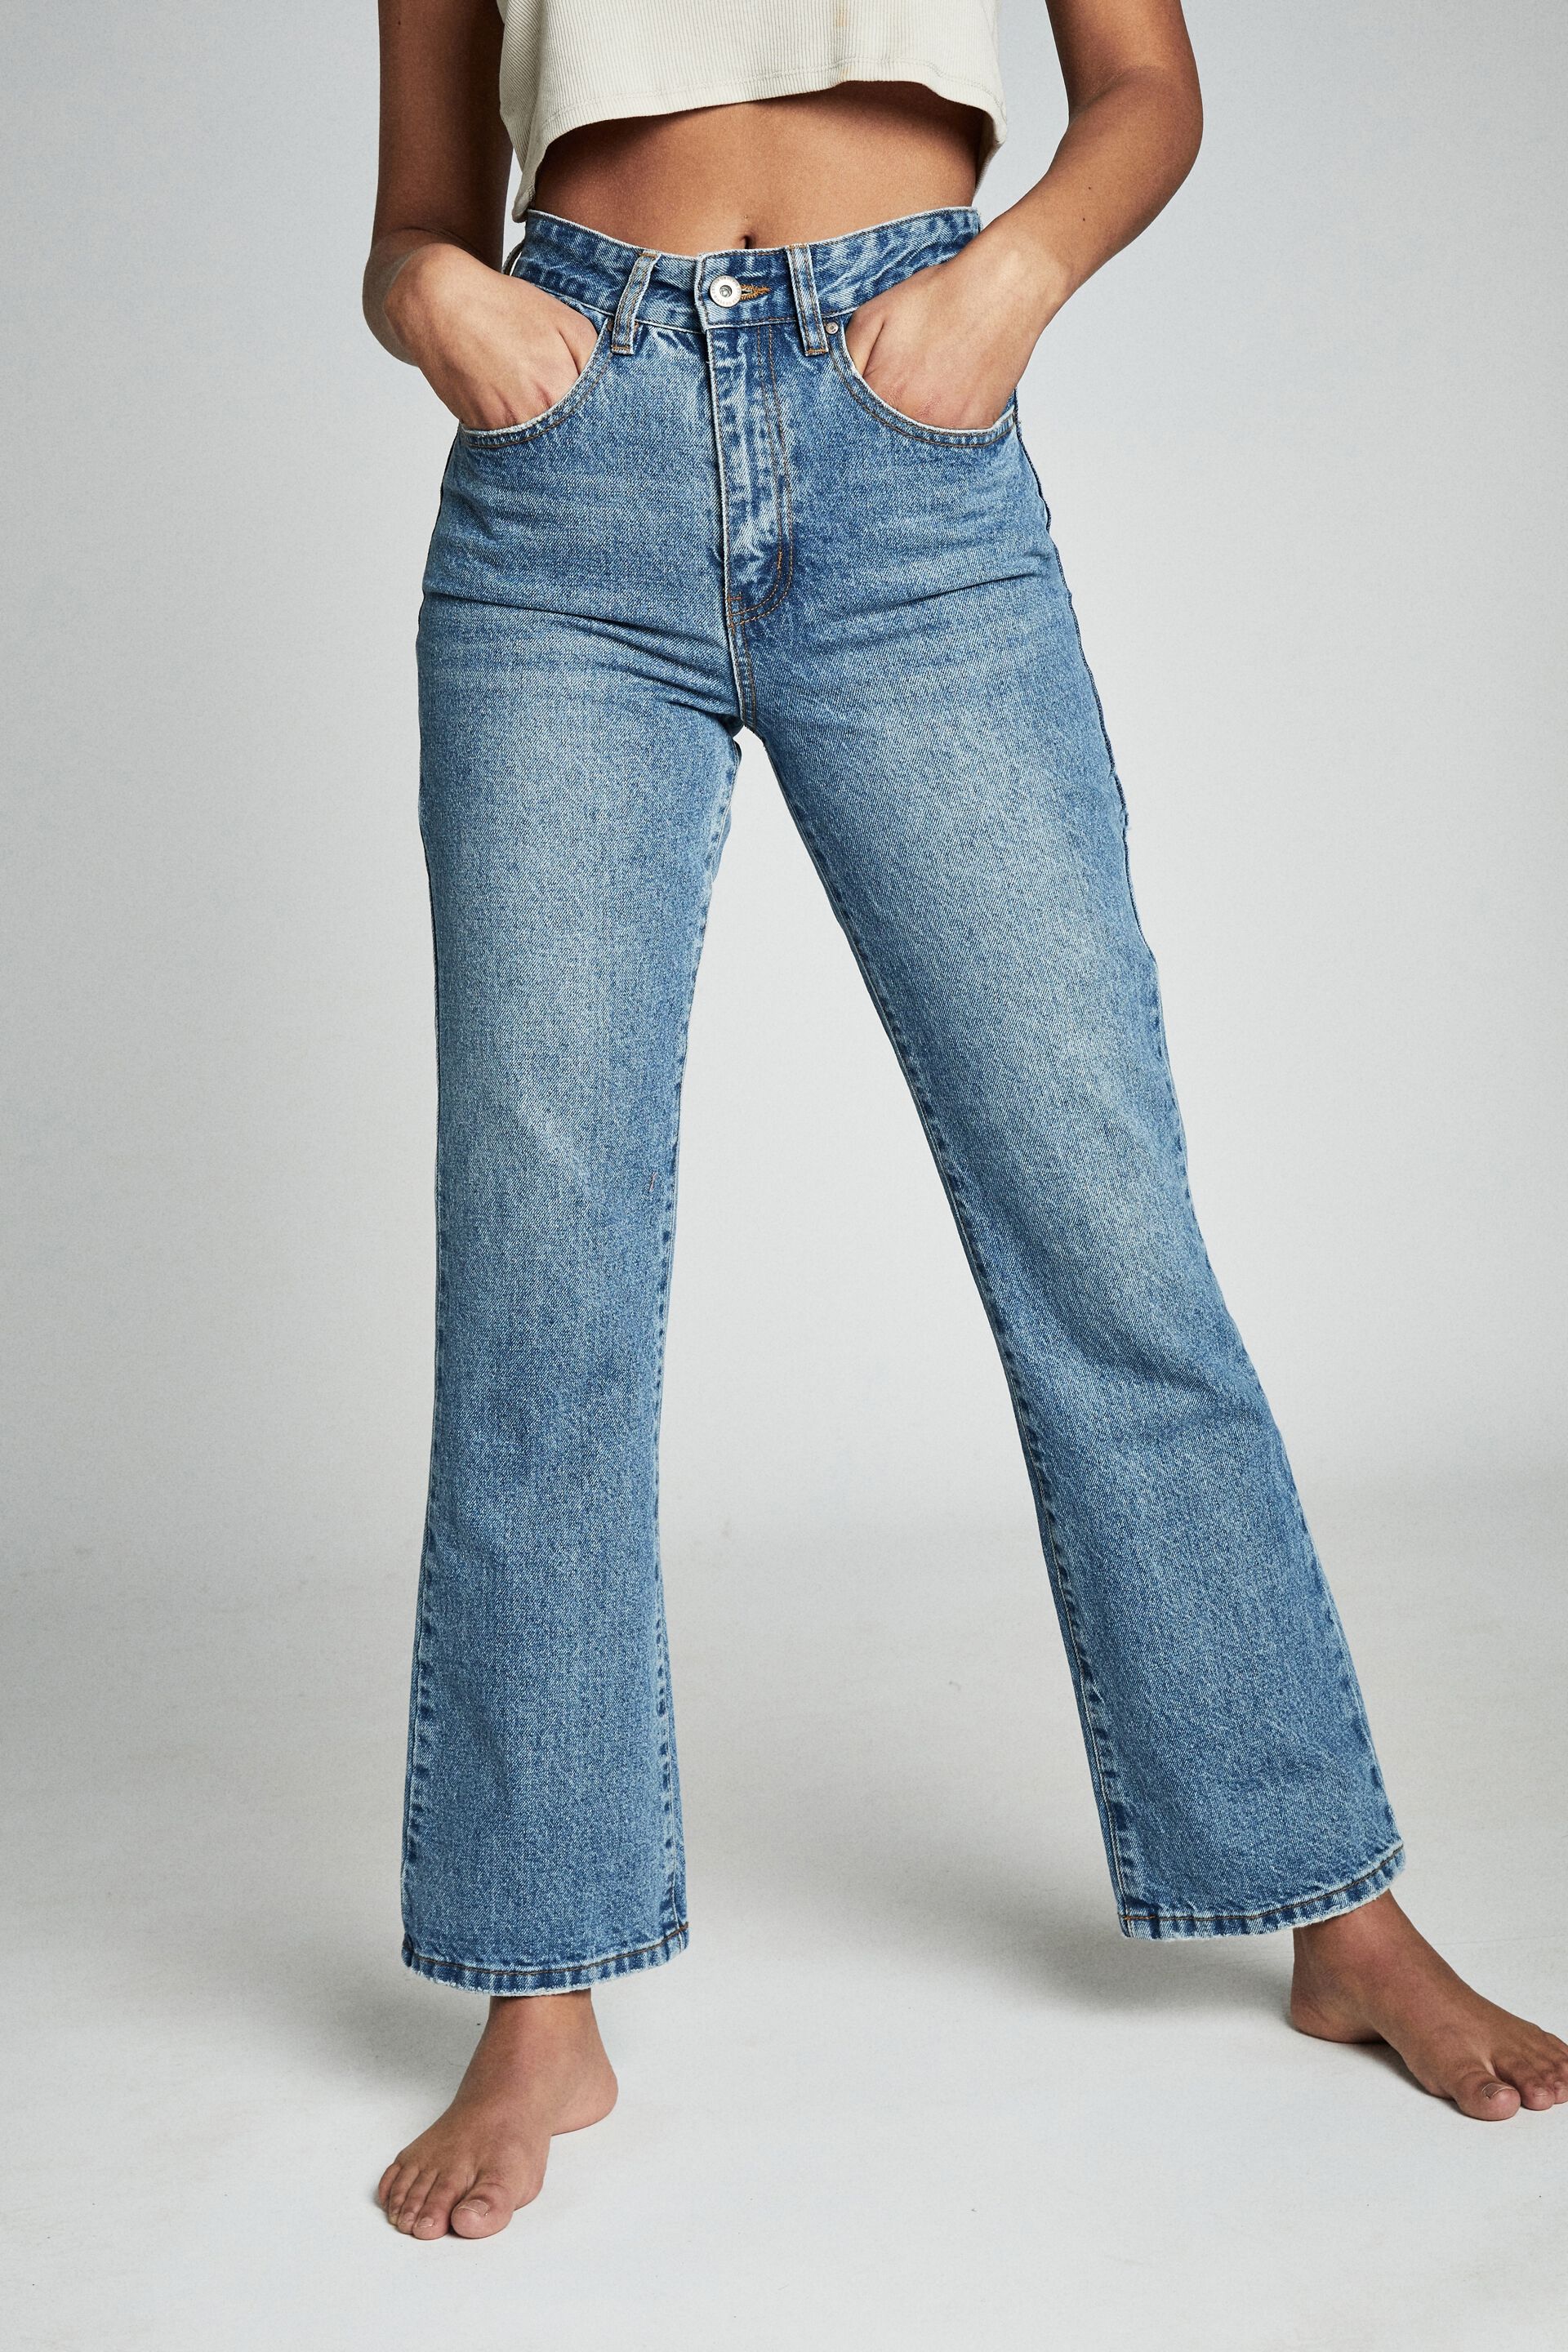 male jeans online